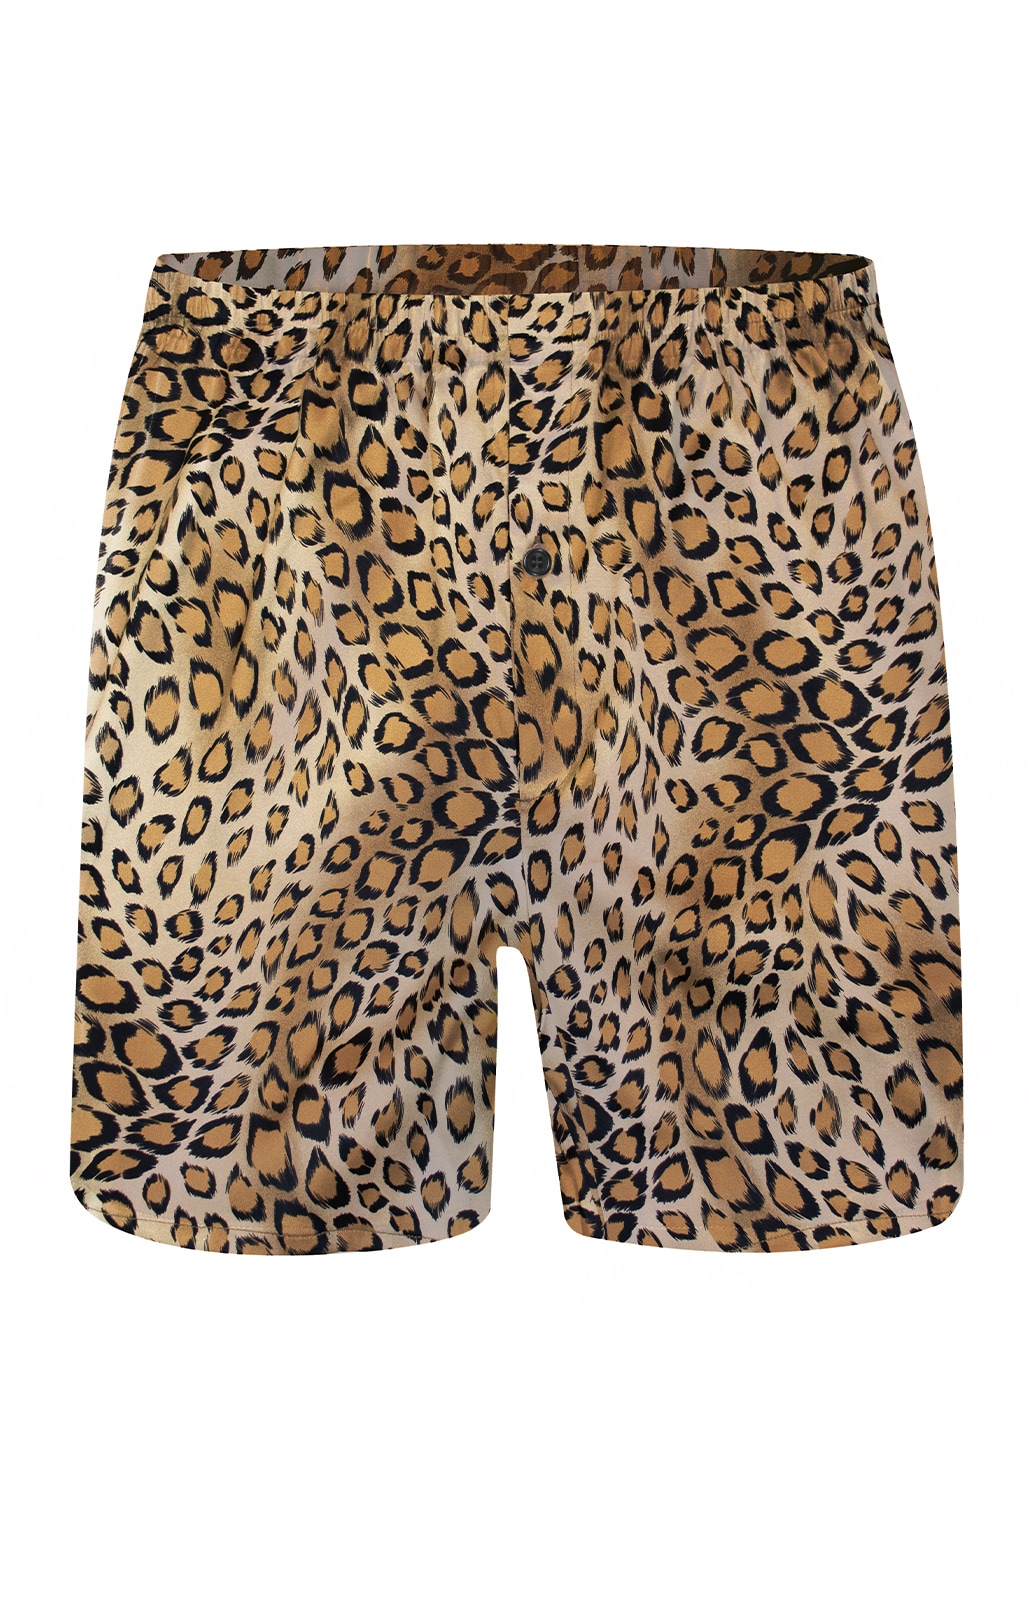 Men's silk satin leopard boxers